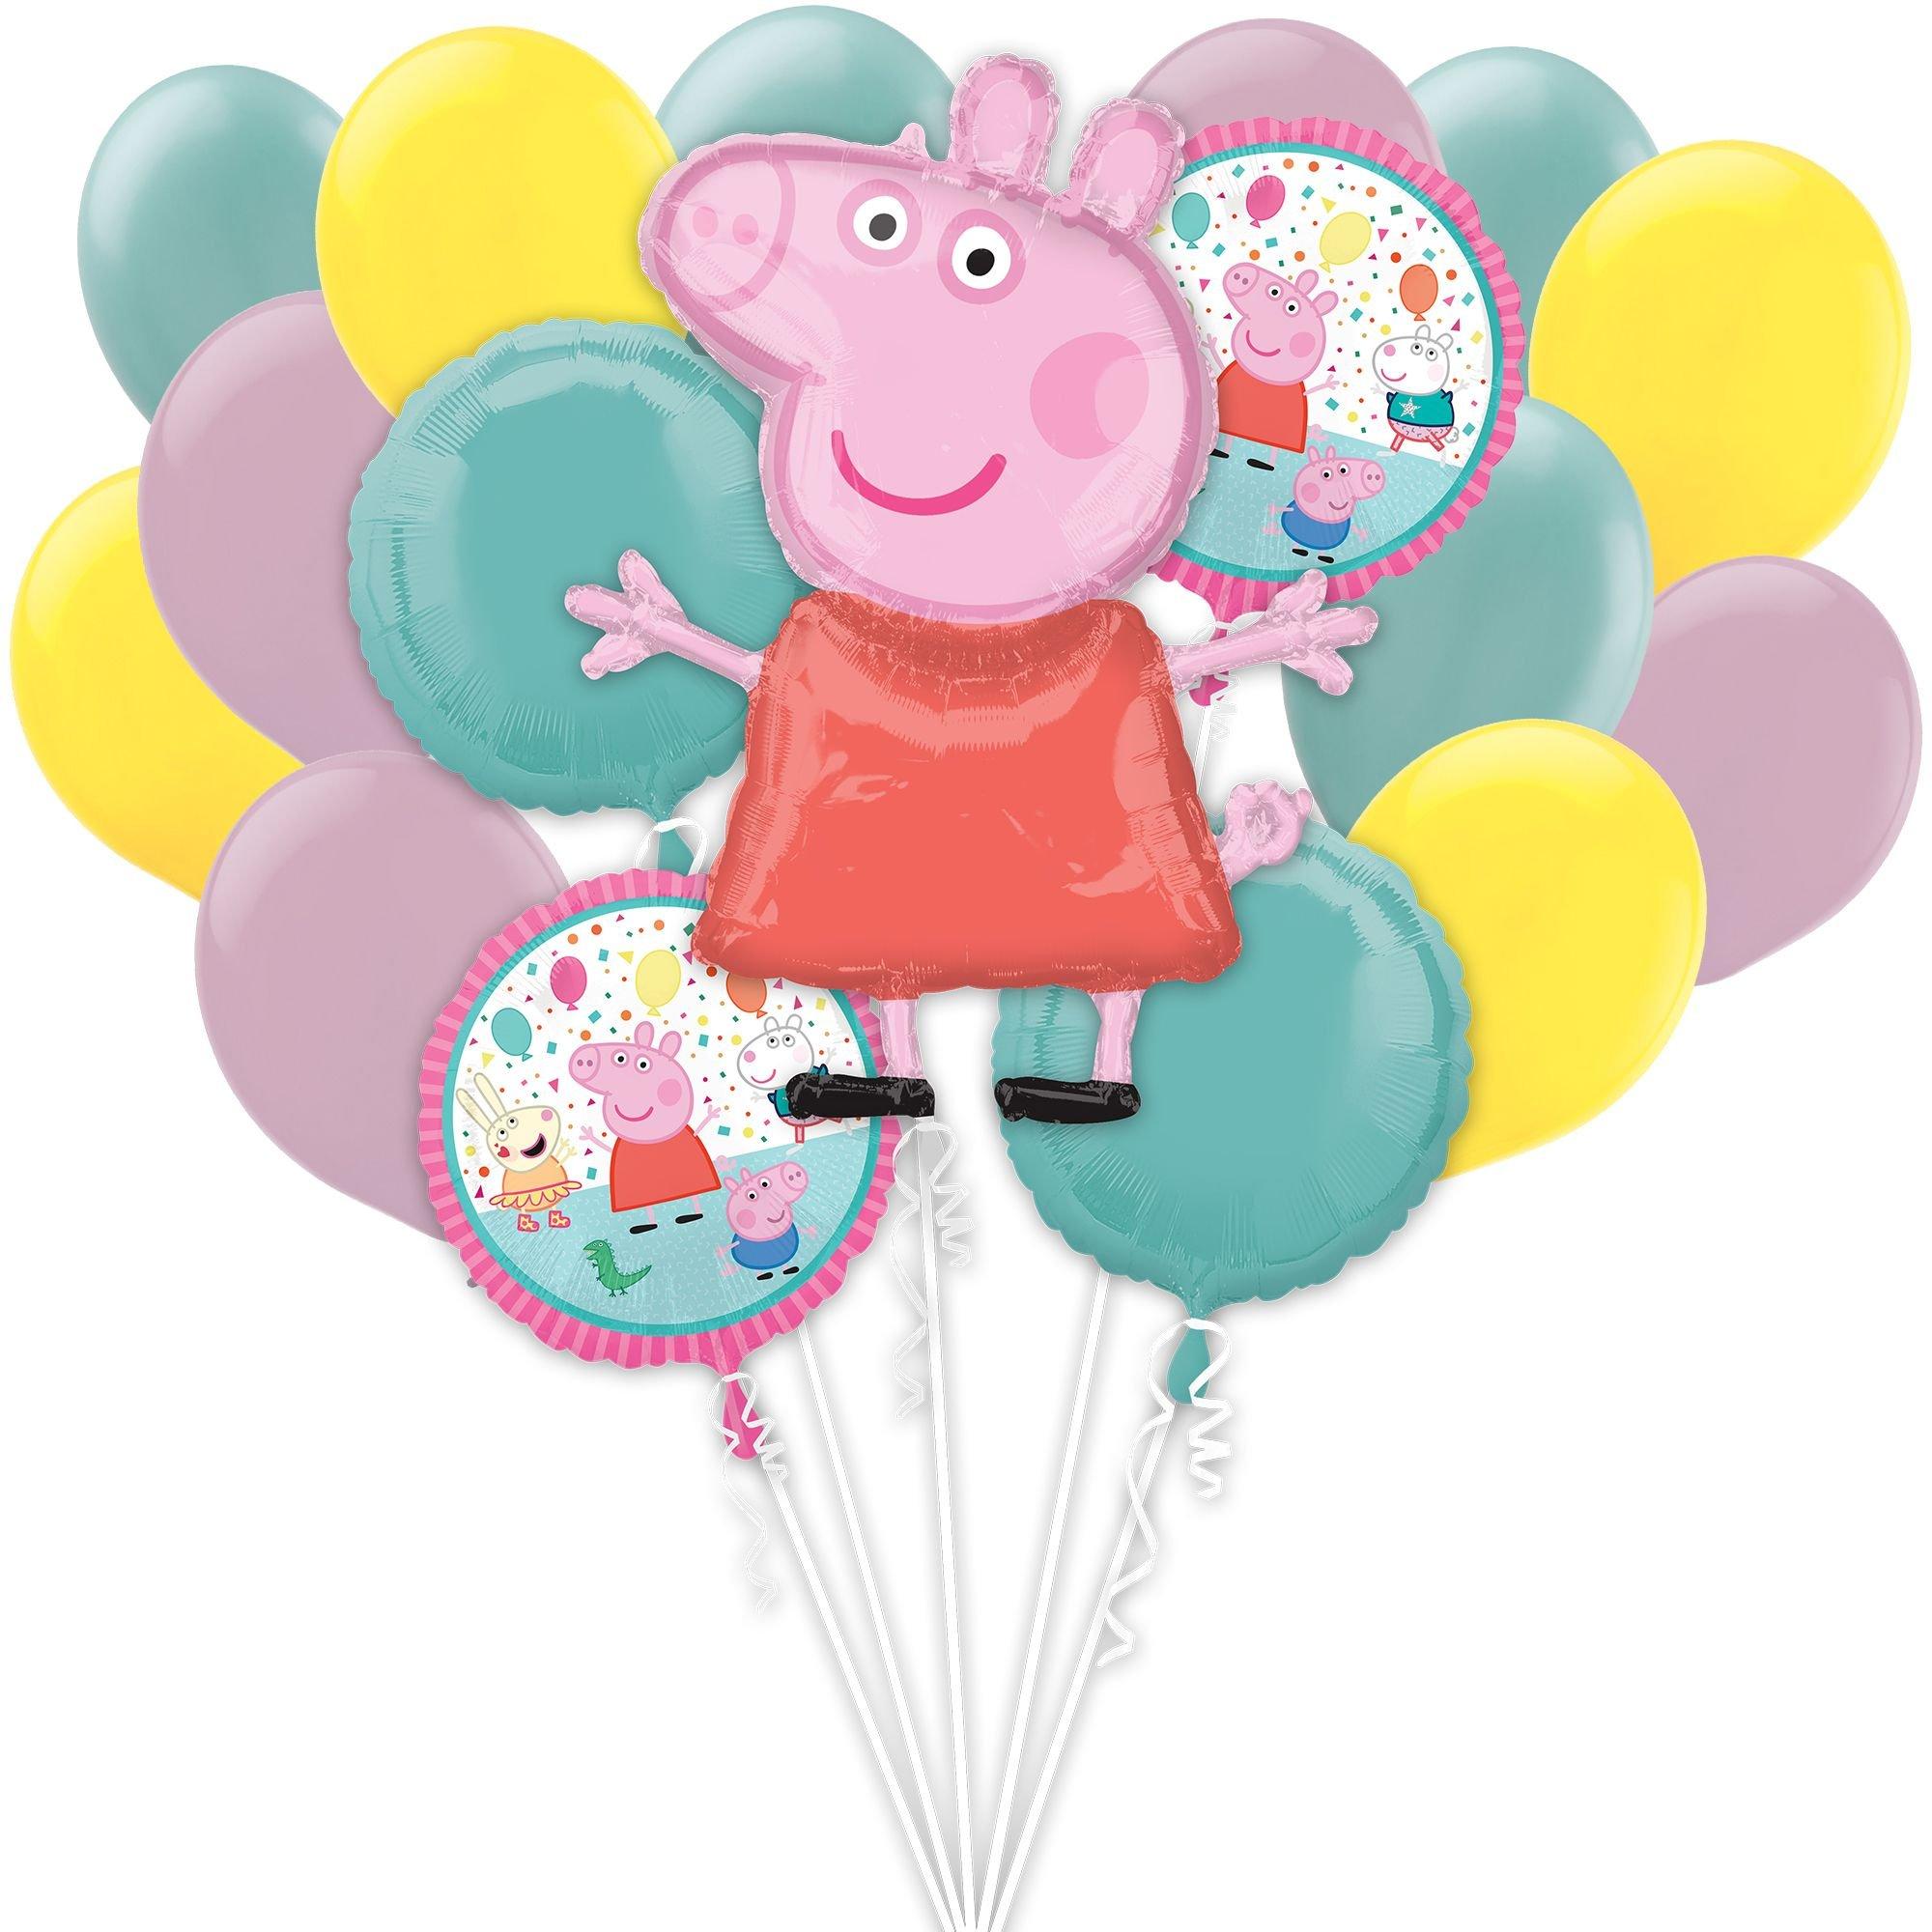 Peppa Pig Balloons